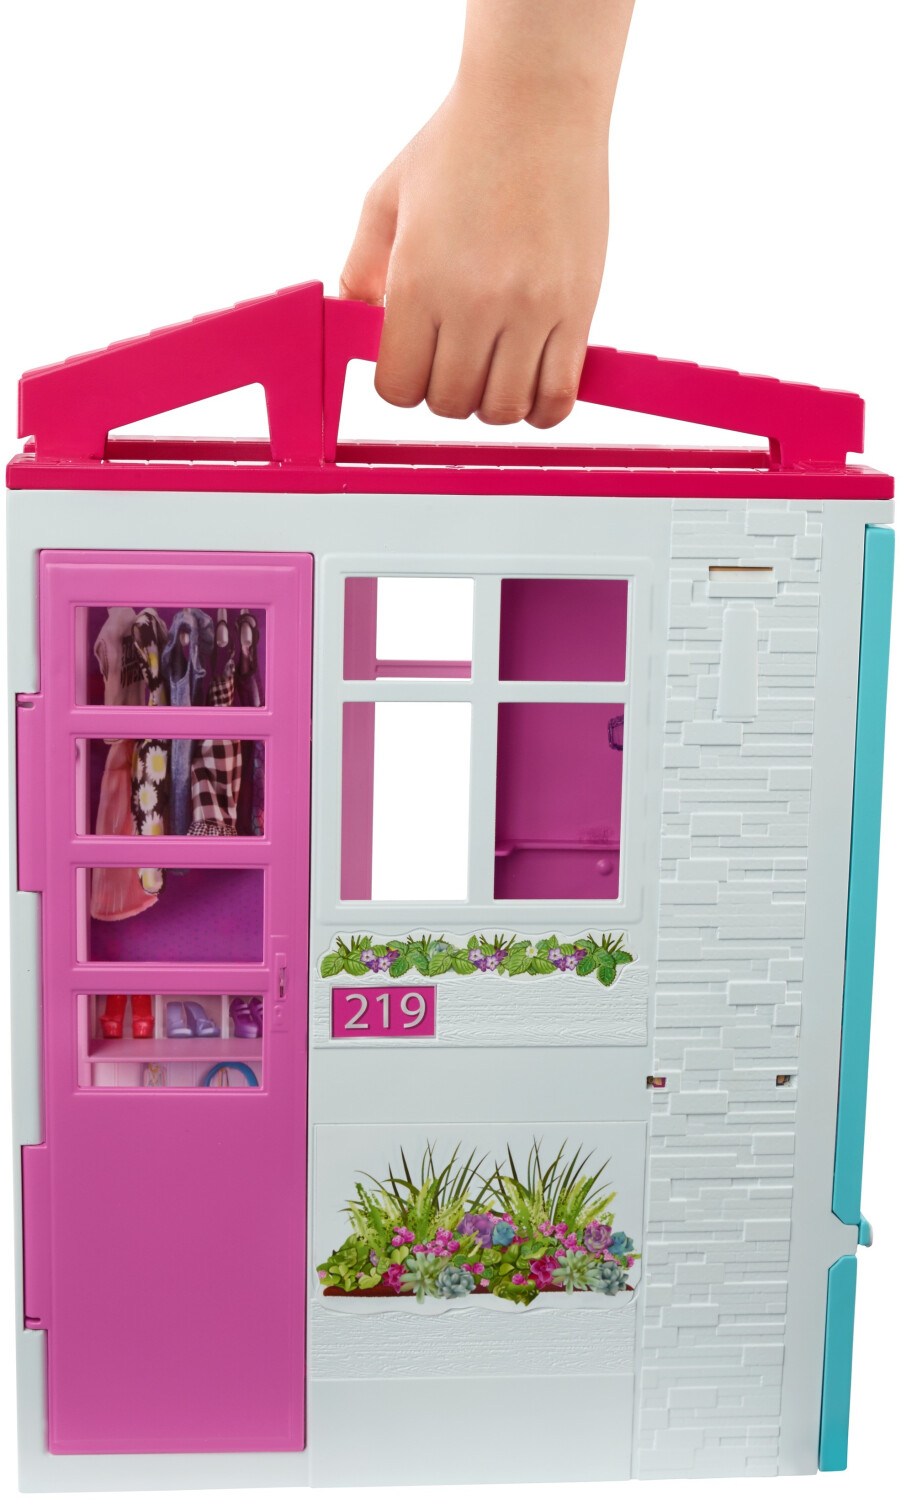 Barbie Ferienhaus ab 48,97 € | Preisvergleich bei